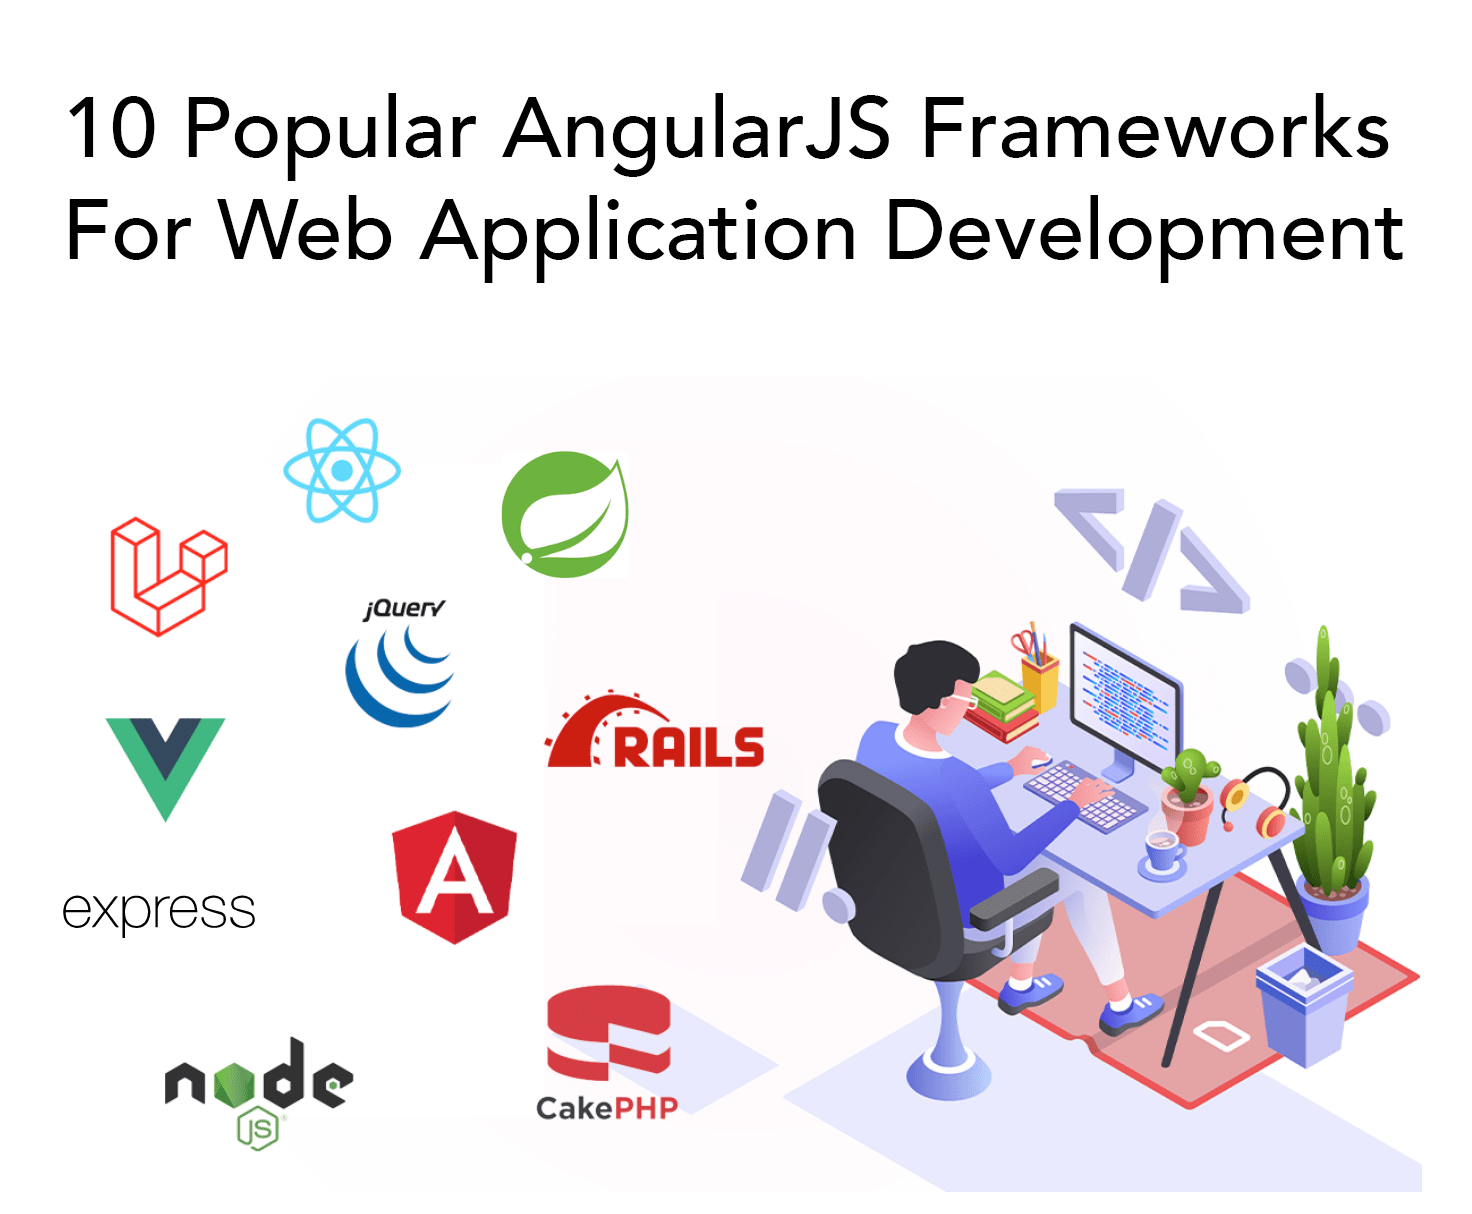 10 Popular AngularJS Frameworks For Web Application Development